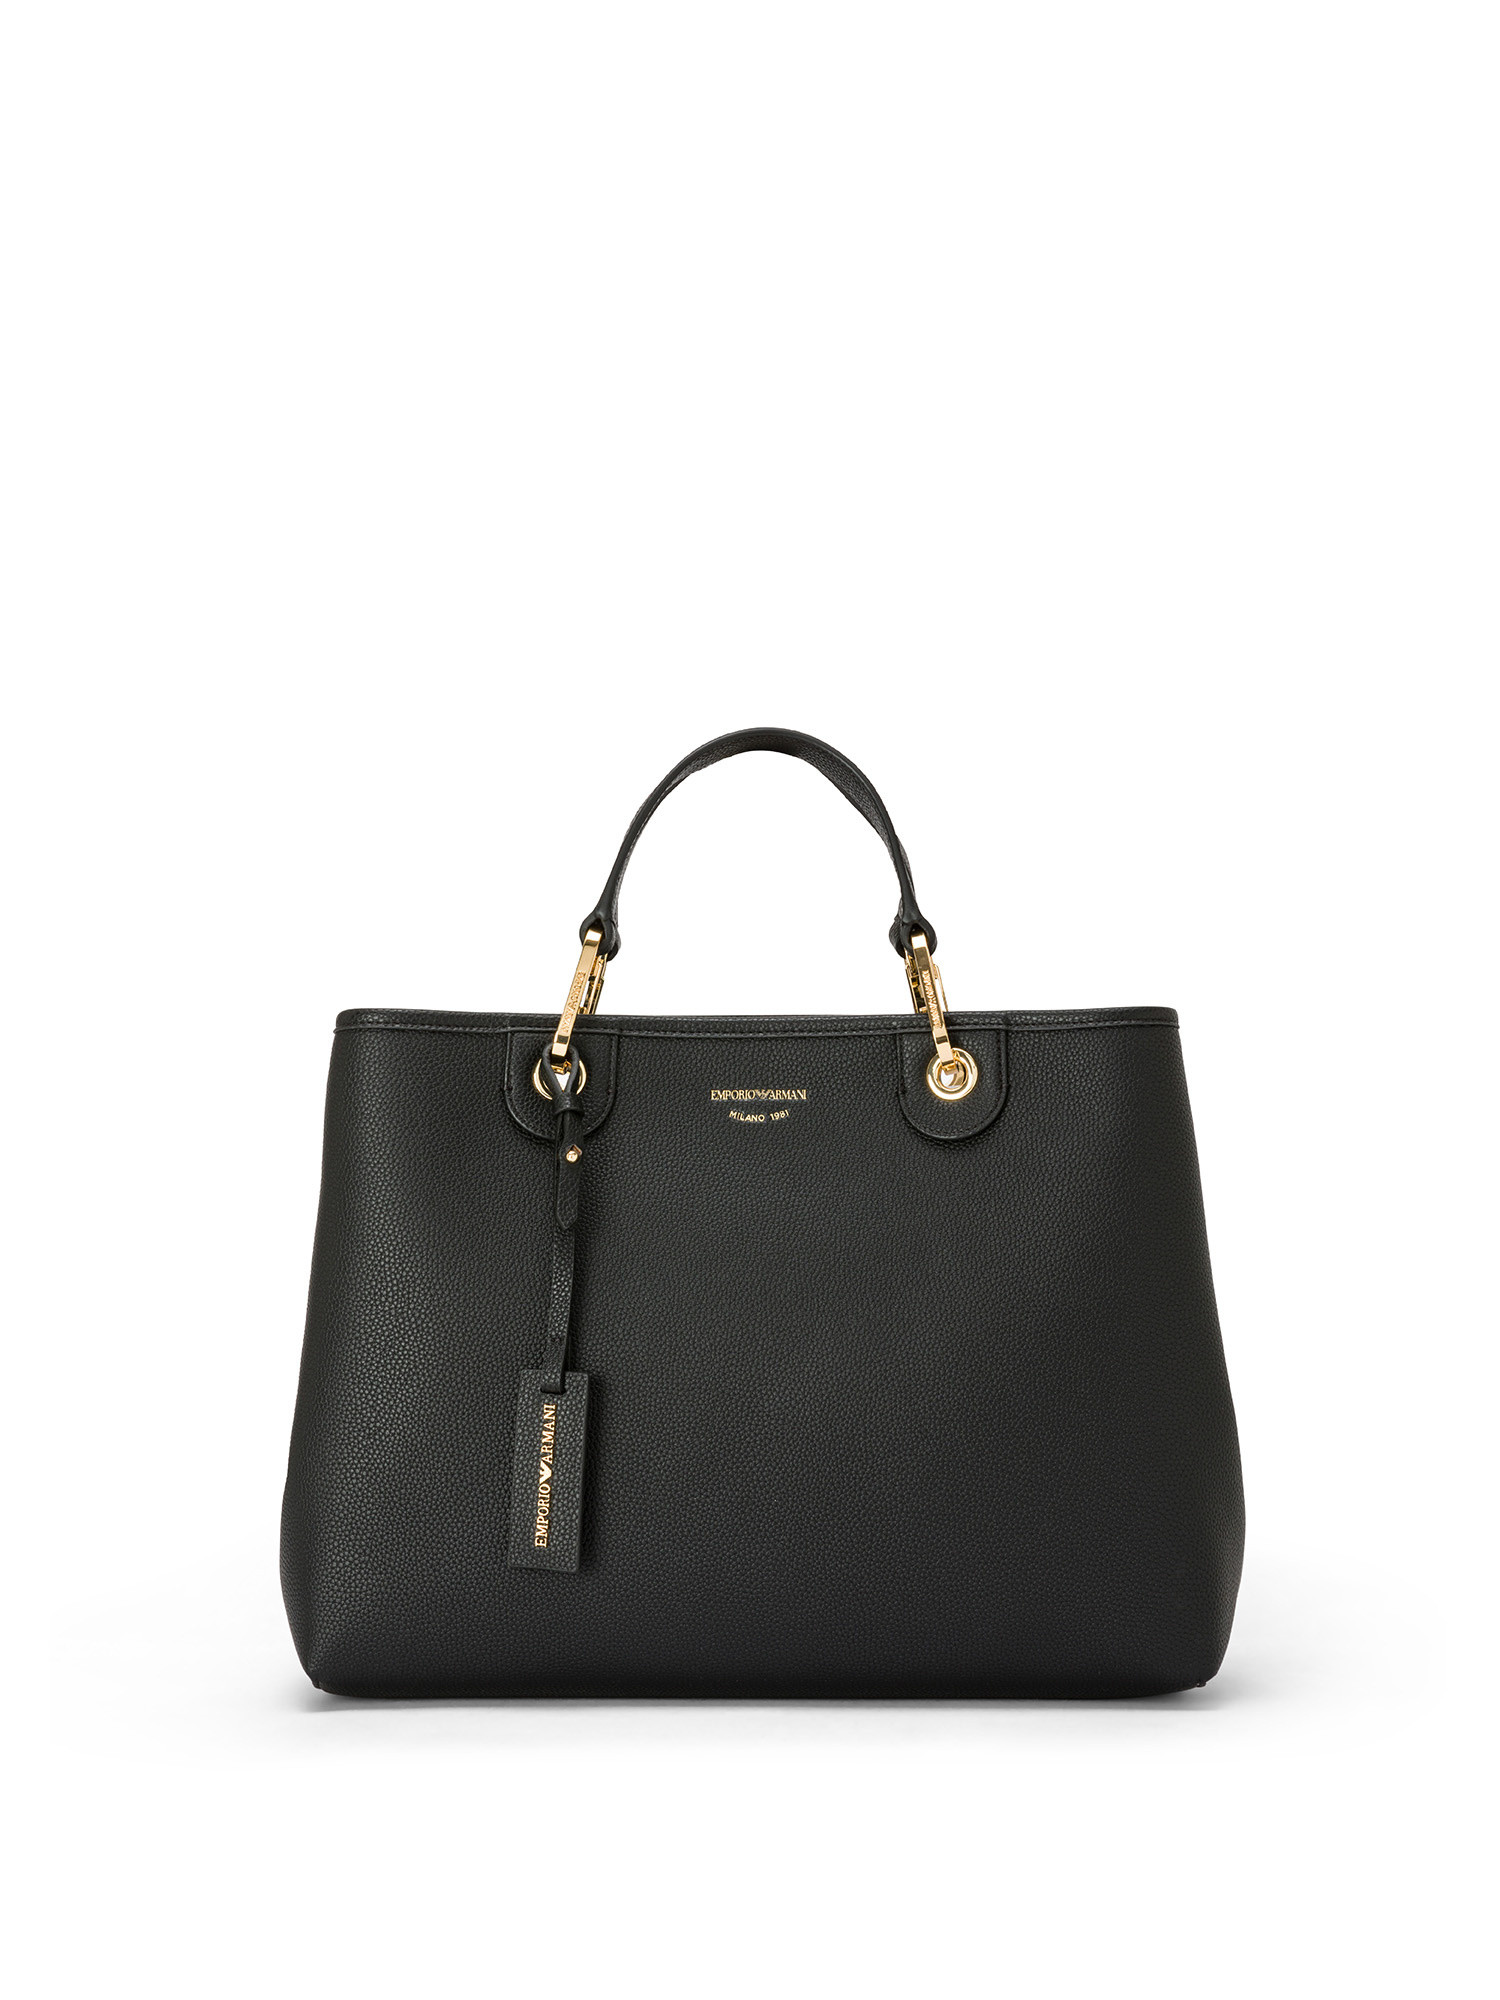 Emporio Armani - Deer print medium shopper bag, Black, large image number 0